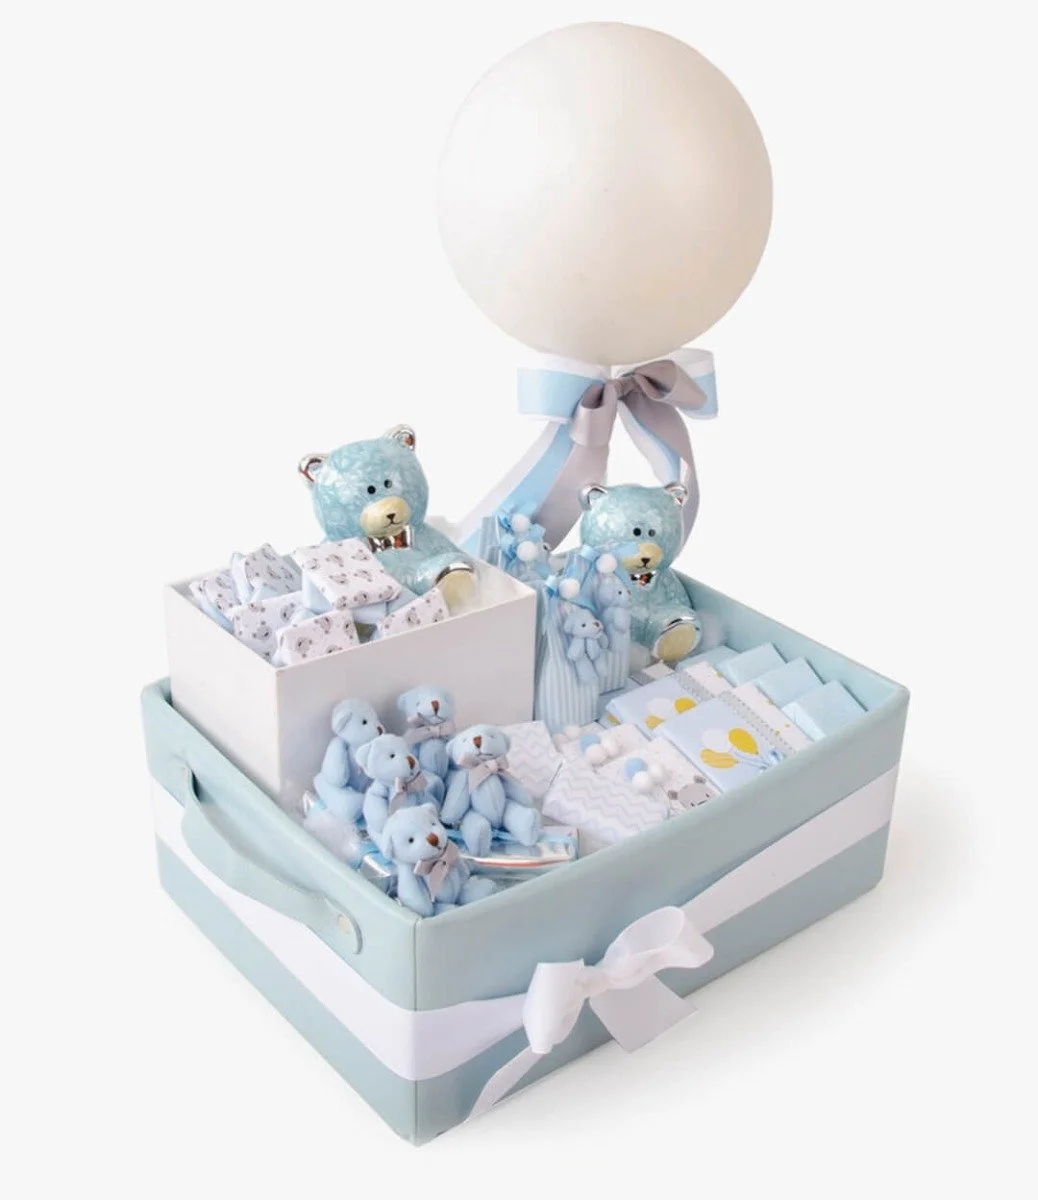 Unbearably Cute Baby Boy Gift Set - Medium